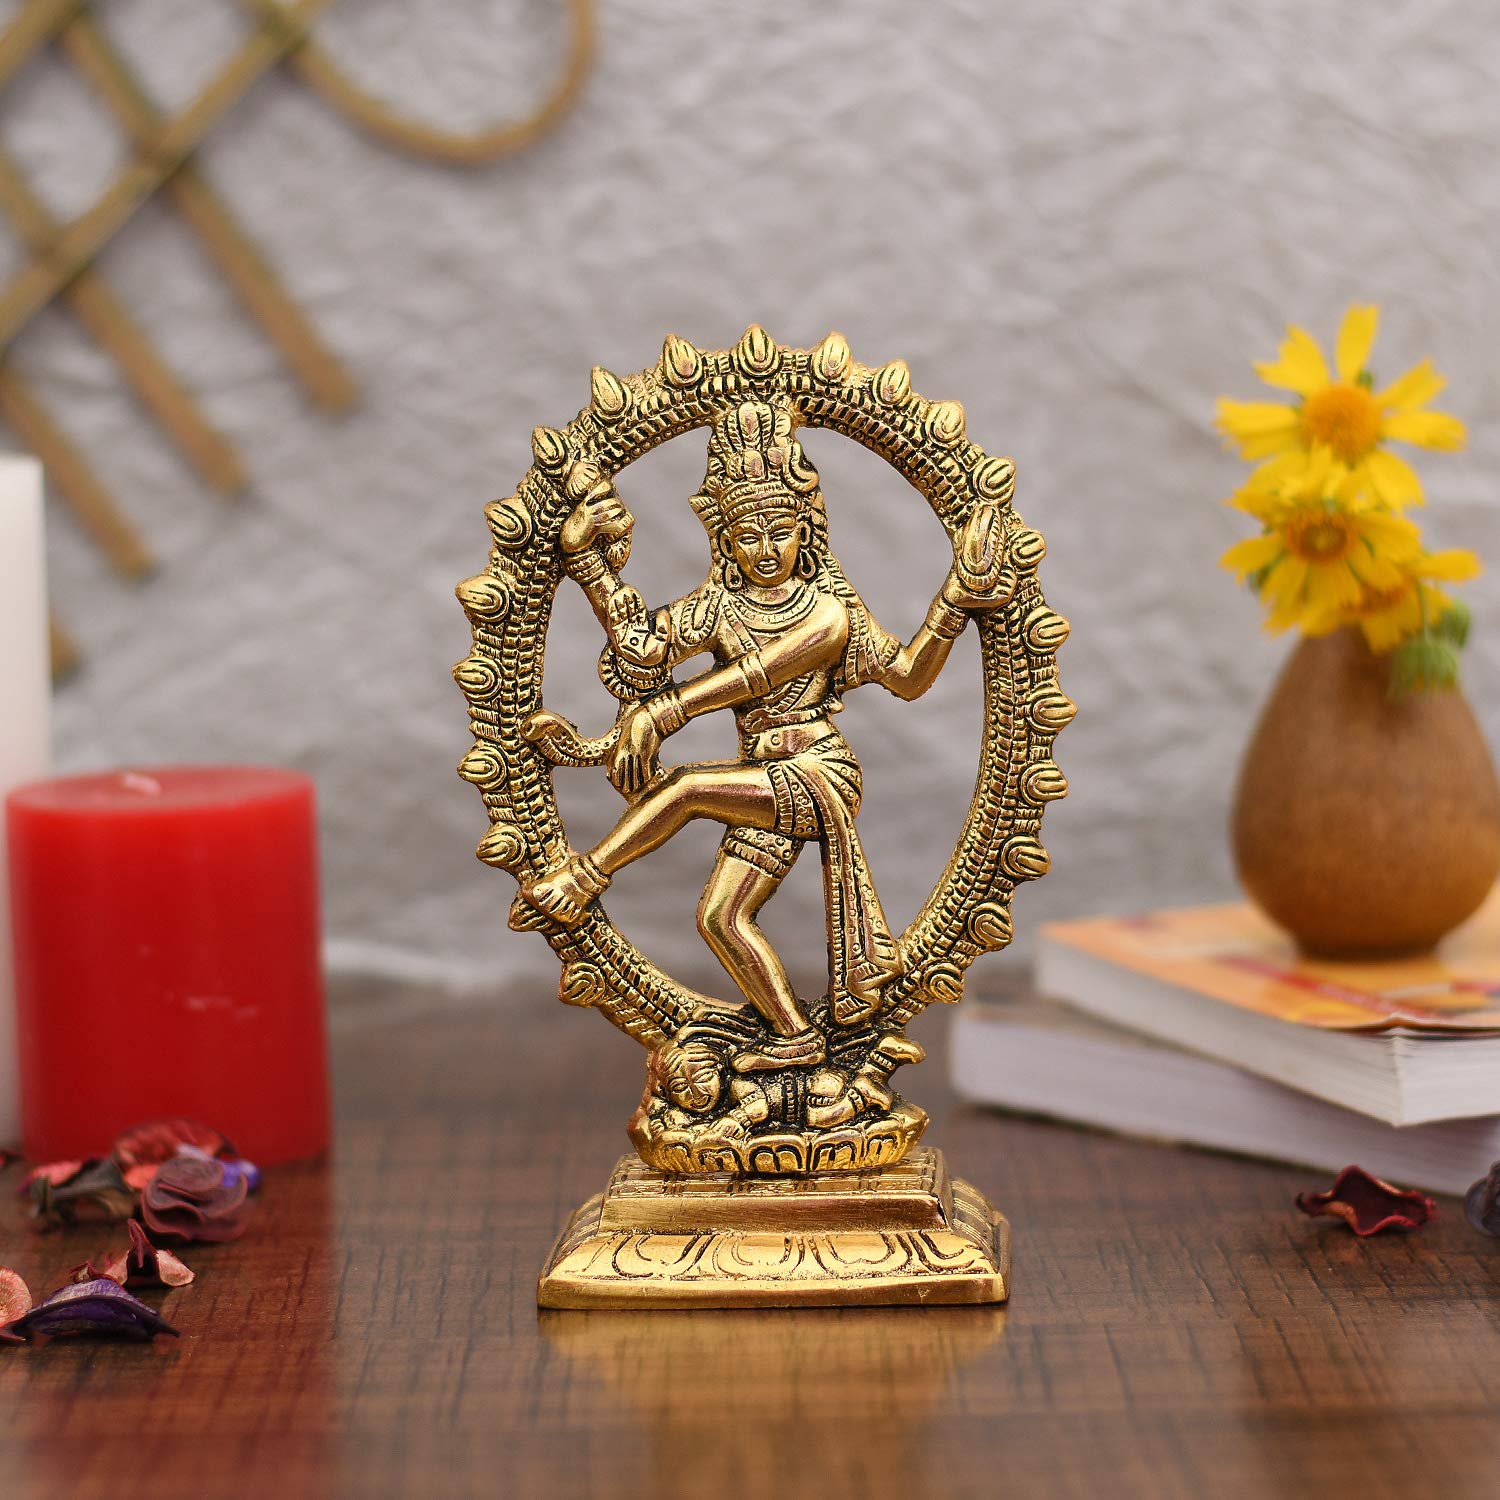 Collectible India Metal Shiva Idol Natraj Statue Statue for Home Decor-Gold Plated Dancing Shiva Natraja-Natrajan Showpiece Figurine Murti Deccoration and Gifts-Stumbit Home